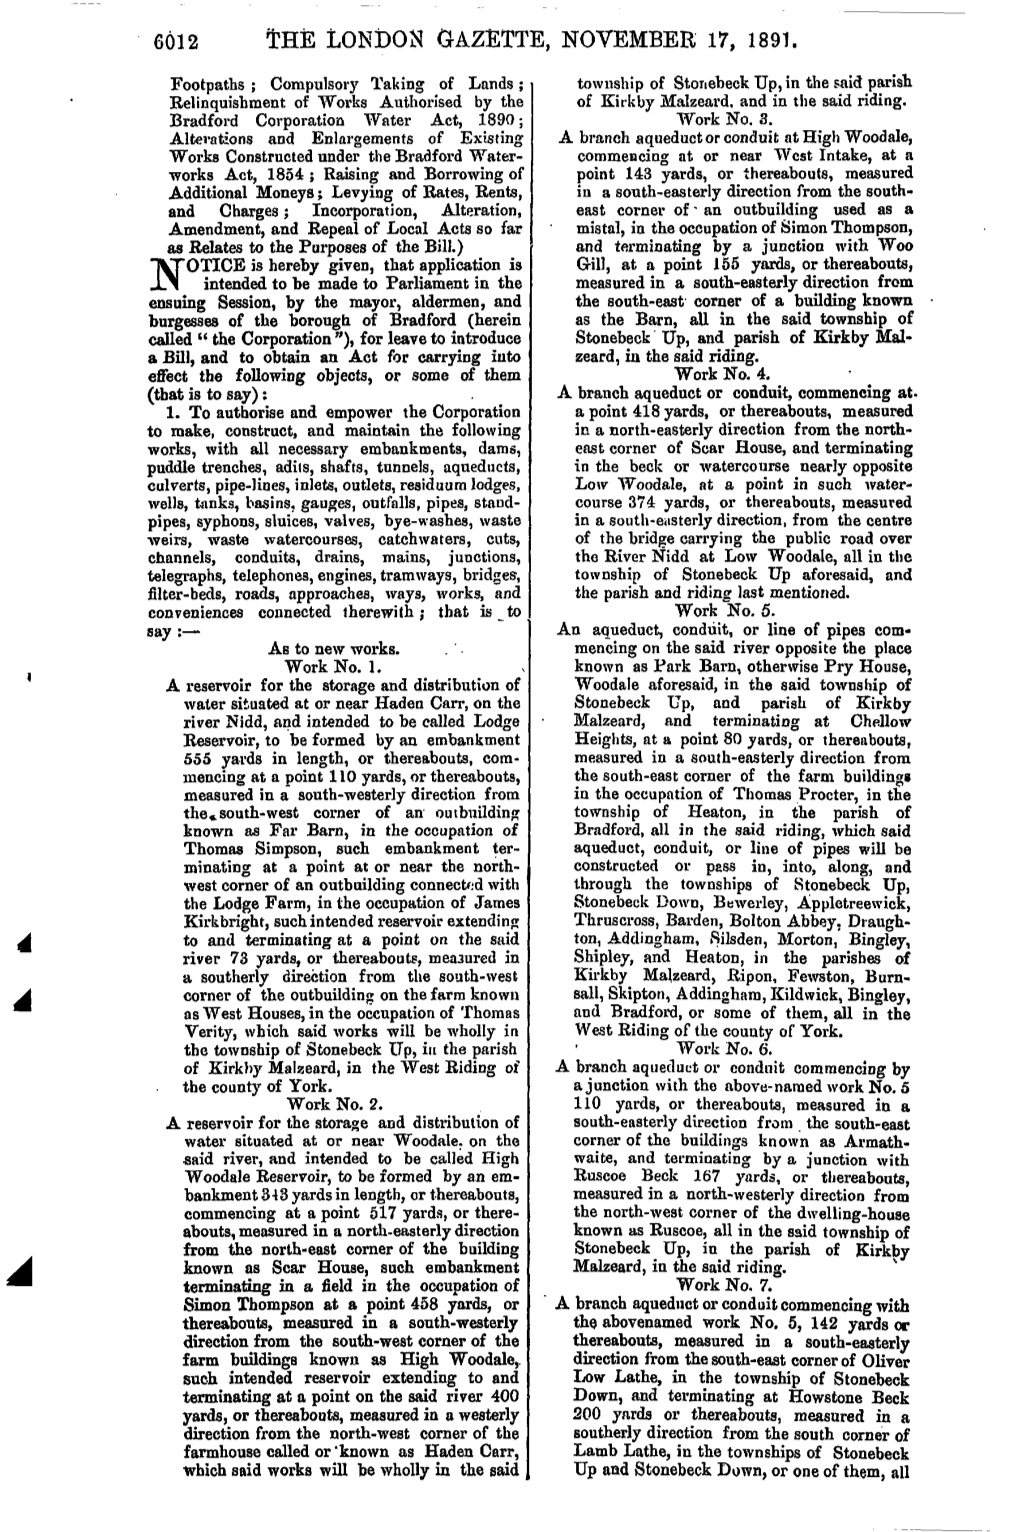 The London Gazette, November 17, 1891